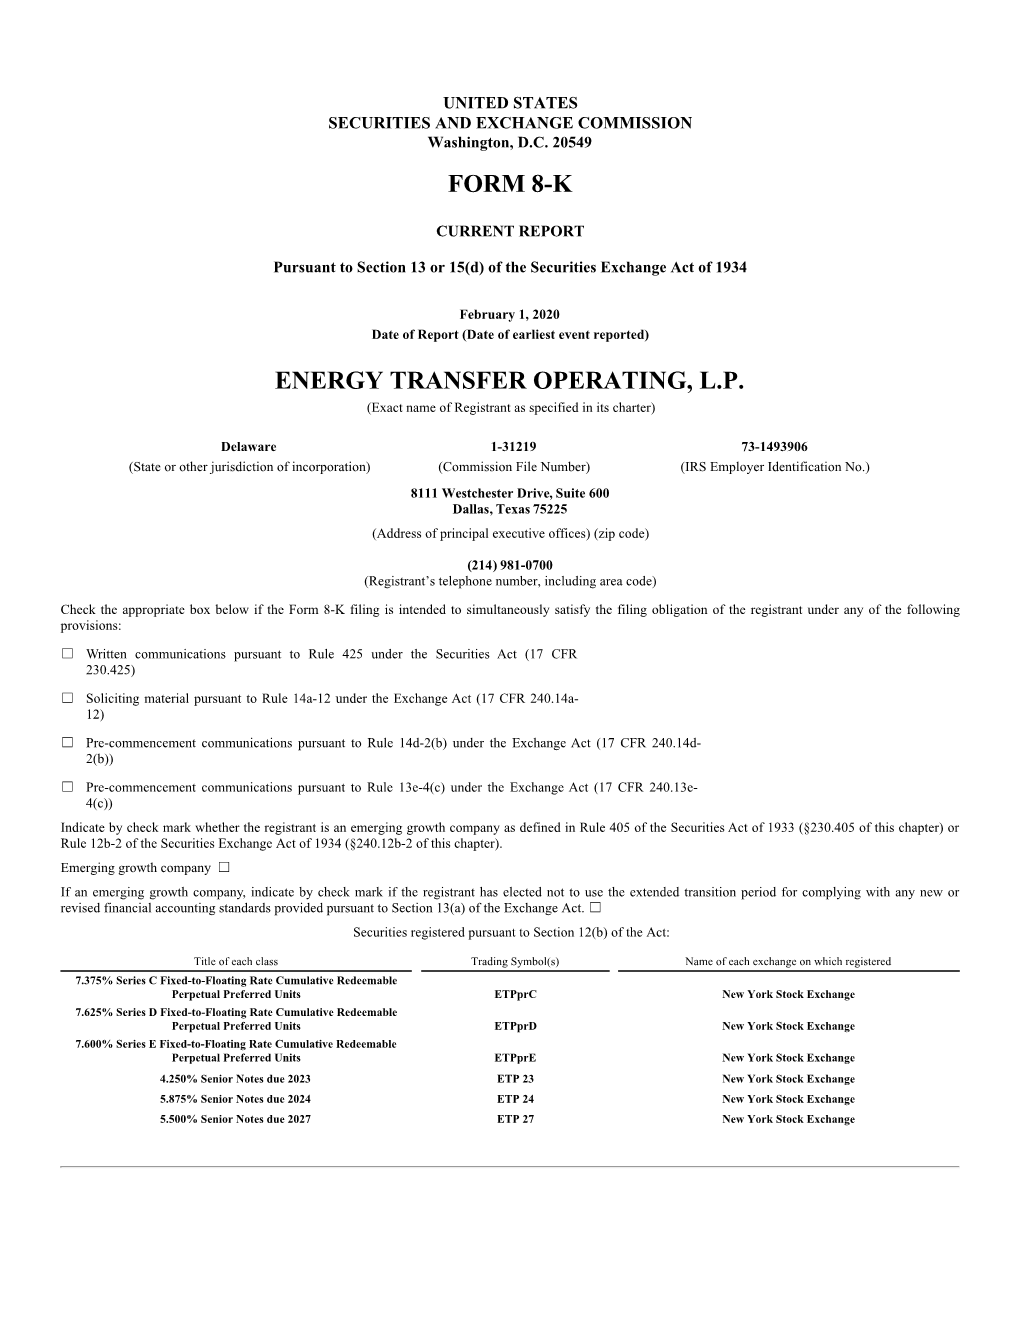 Form 8-K Energy Transfer Operating, L.P